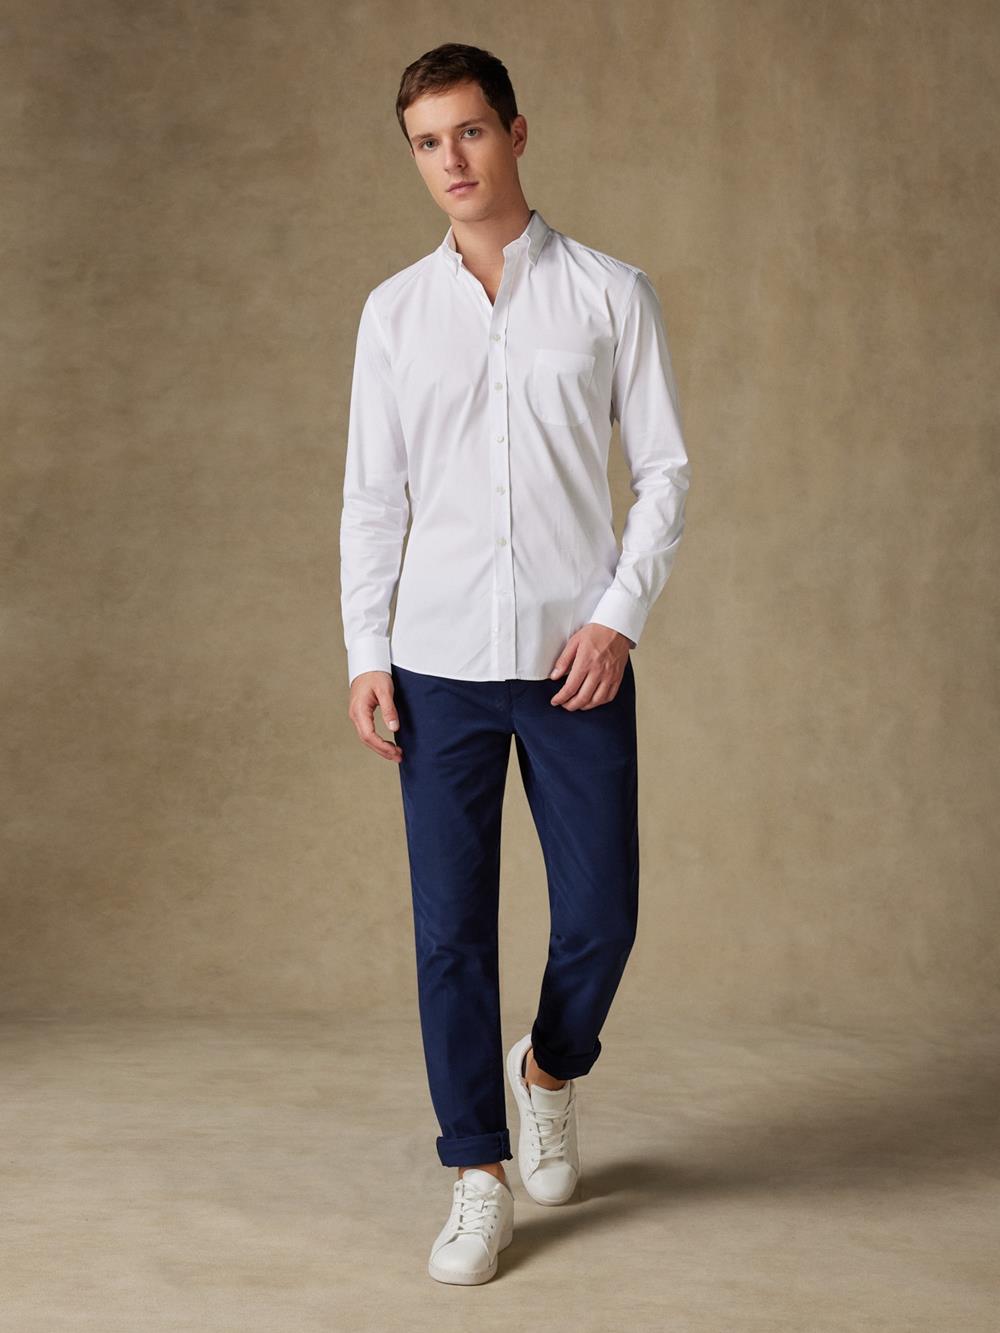 White poplin shirt - Button down collar